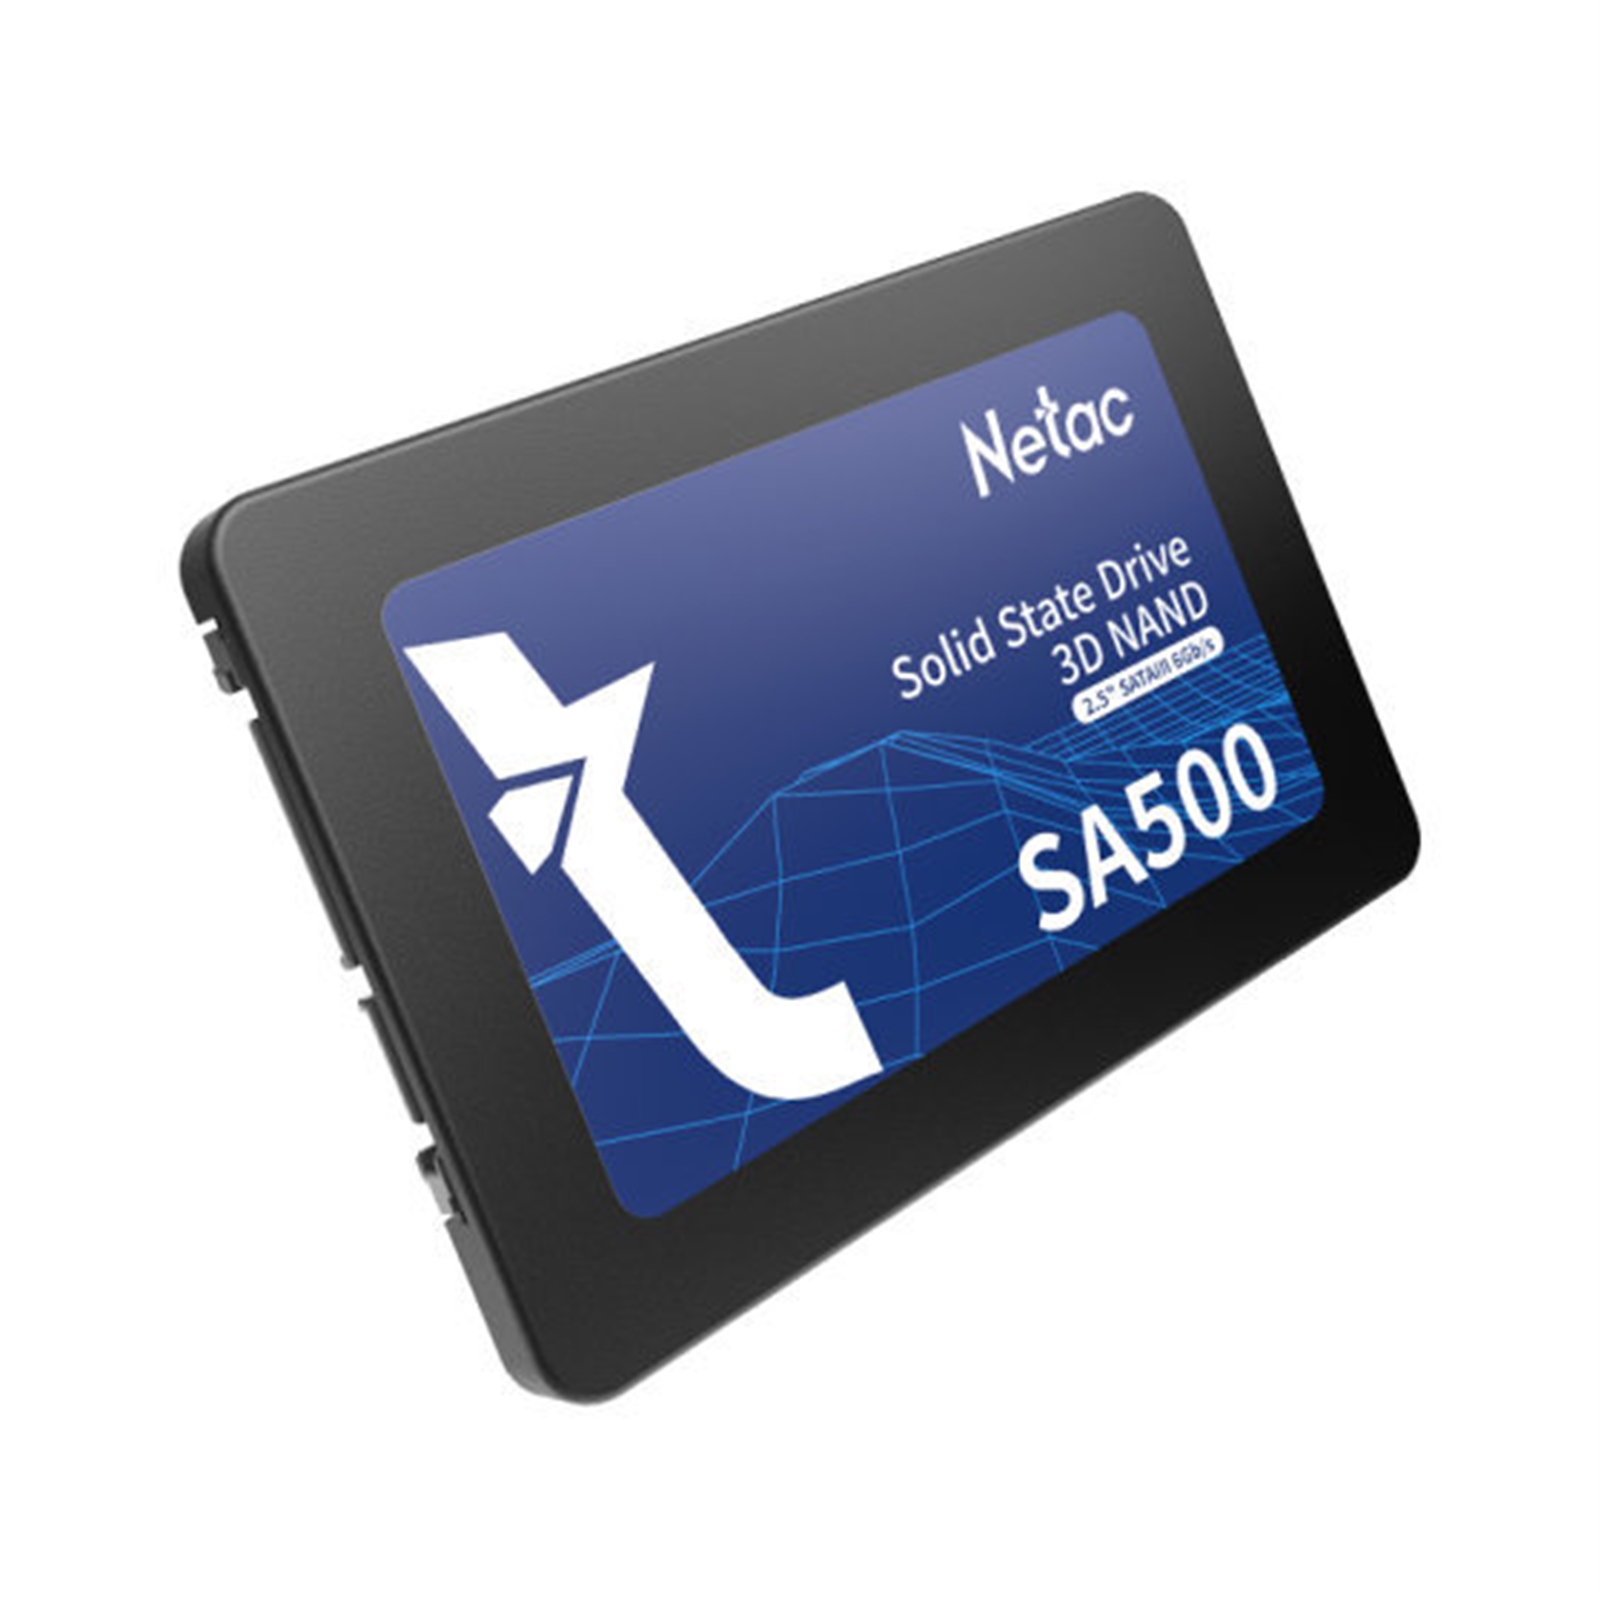 Netac SA500 (NT01SA500-480-S3X) 480GB 2.5 Inch SSD, Sata 3 Interface, Read 520MB/s,Write 450MB/s, 3 Year Warranty